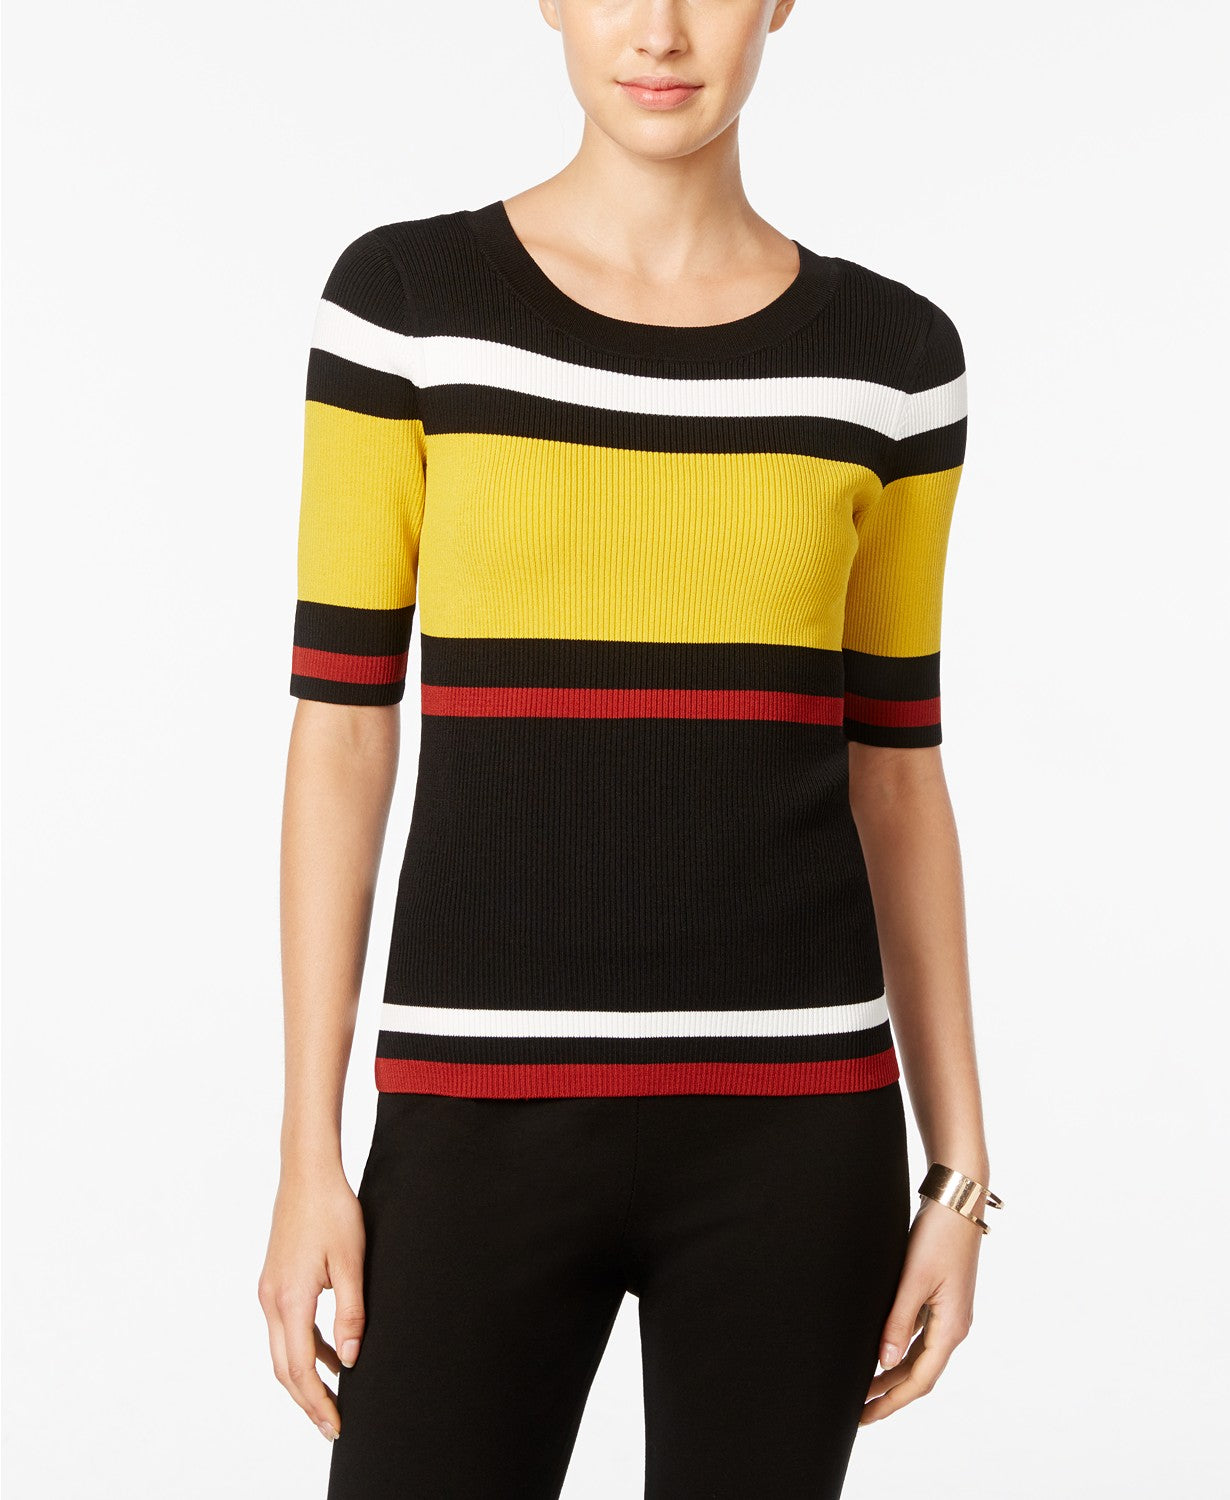 INC International Concepts Petite Striped Sweater Black Color Combo PXS